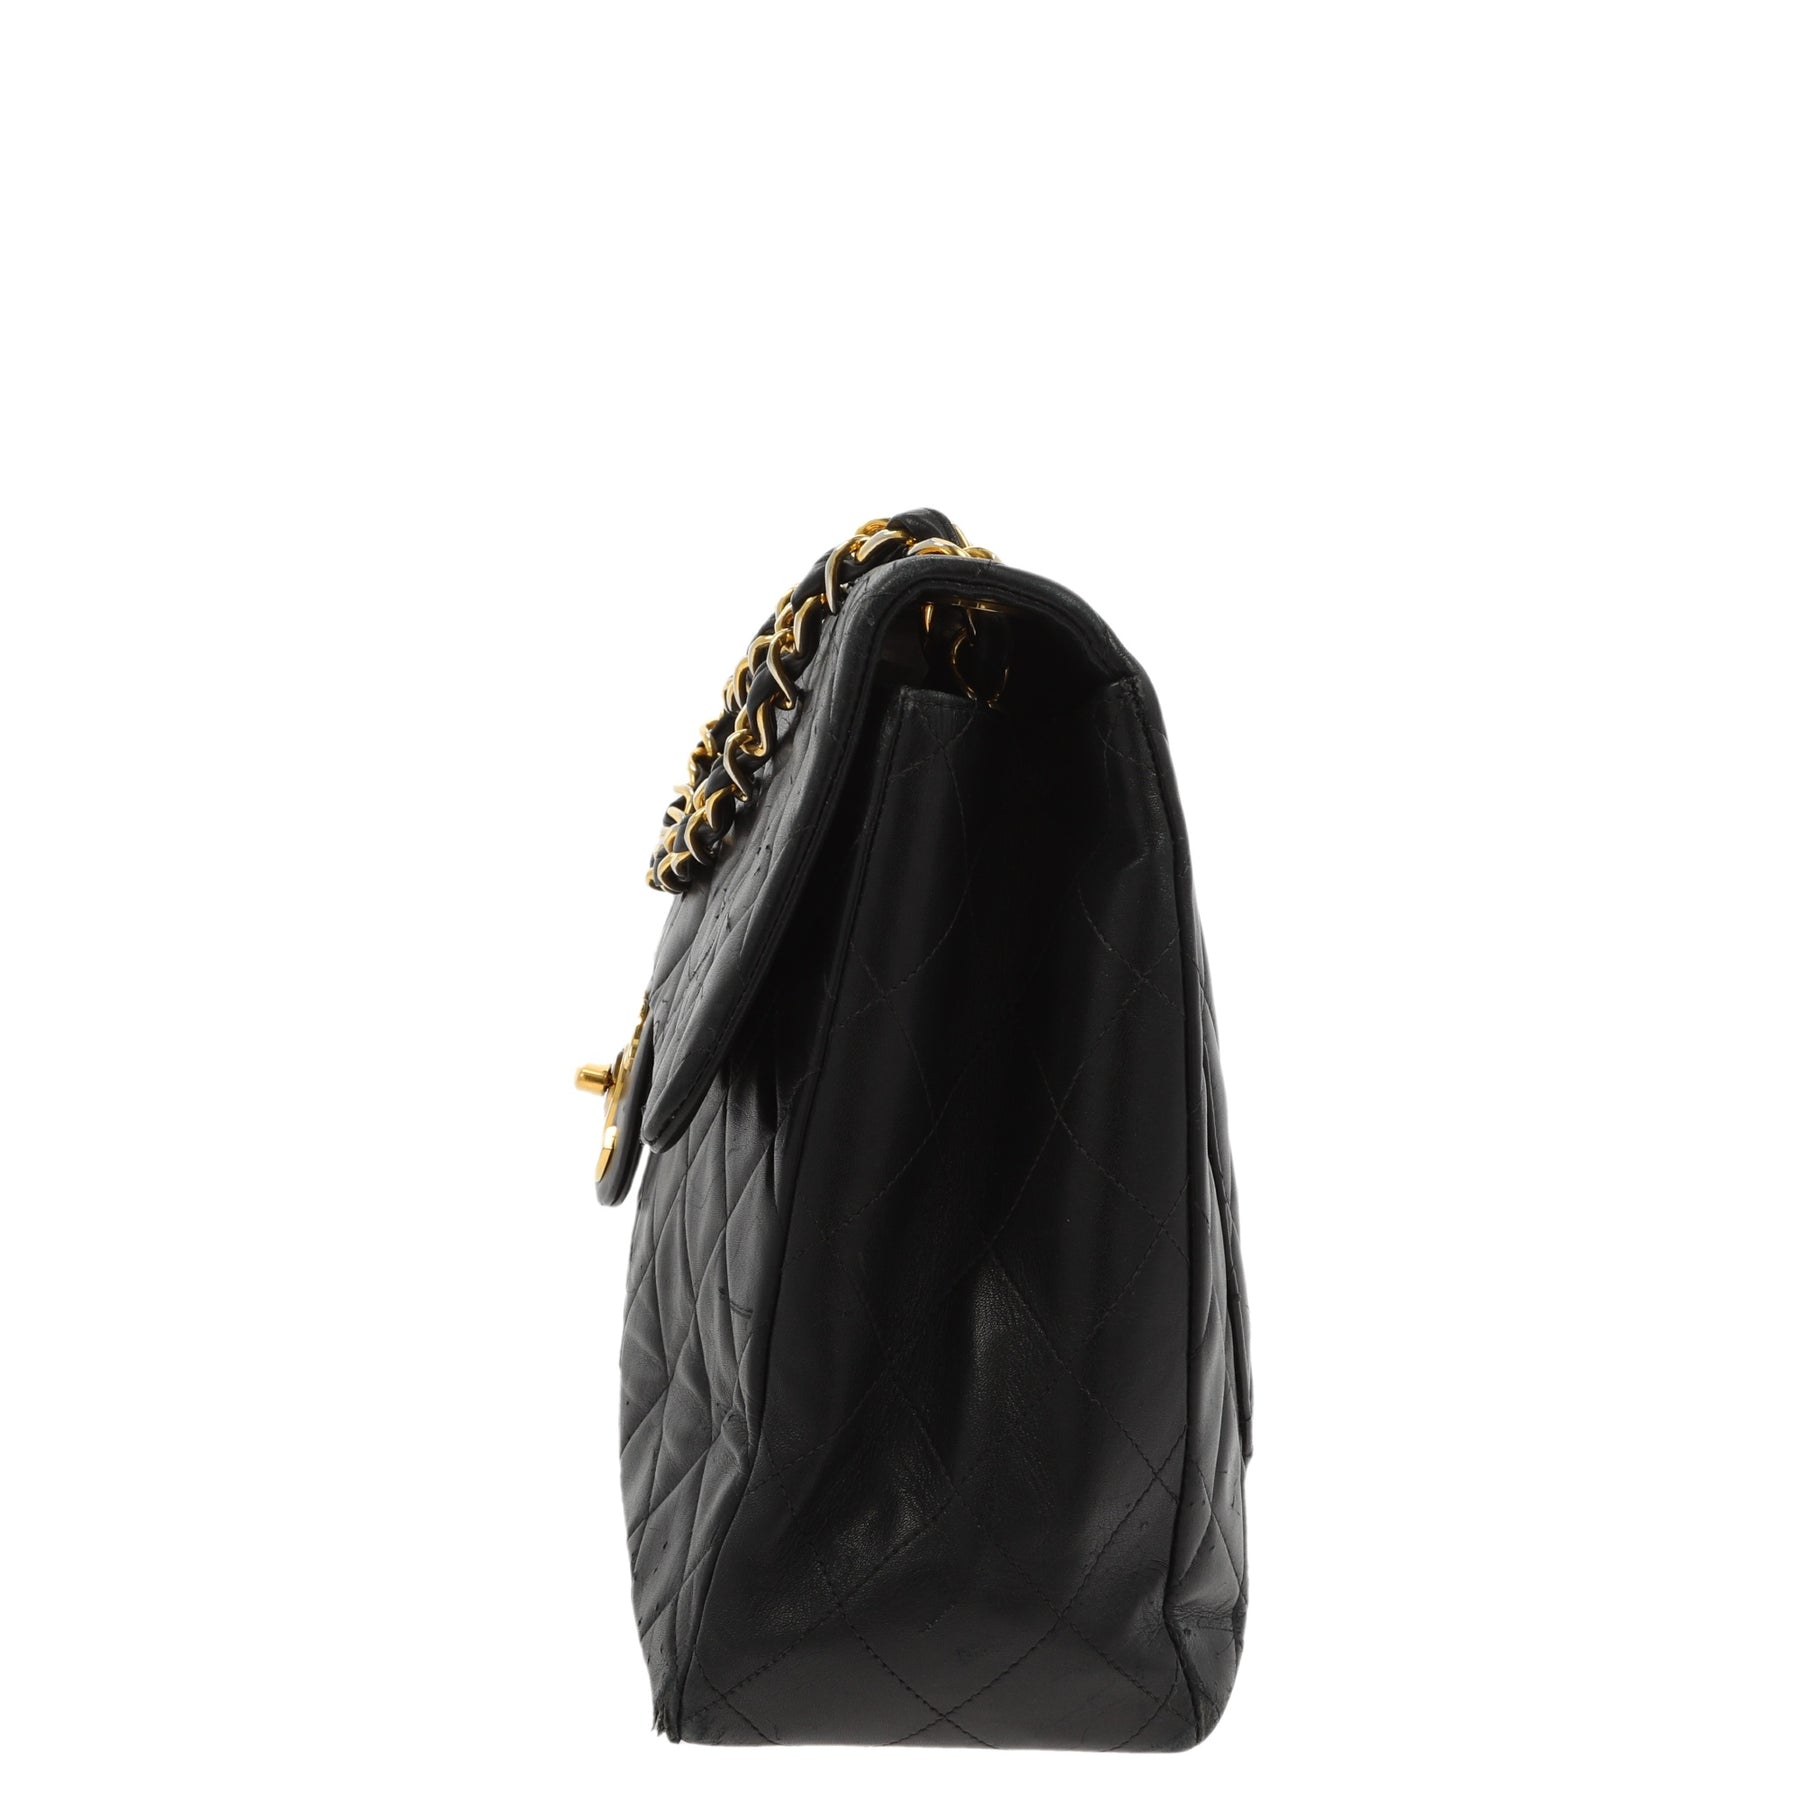 Chanel Timeless/Classique Maxi Shoulder Bag in Black Leather